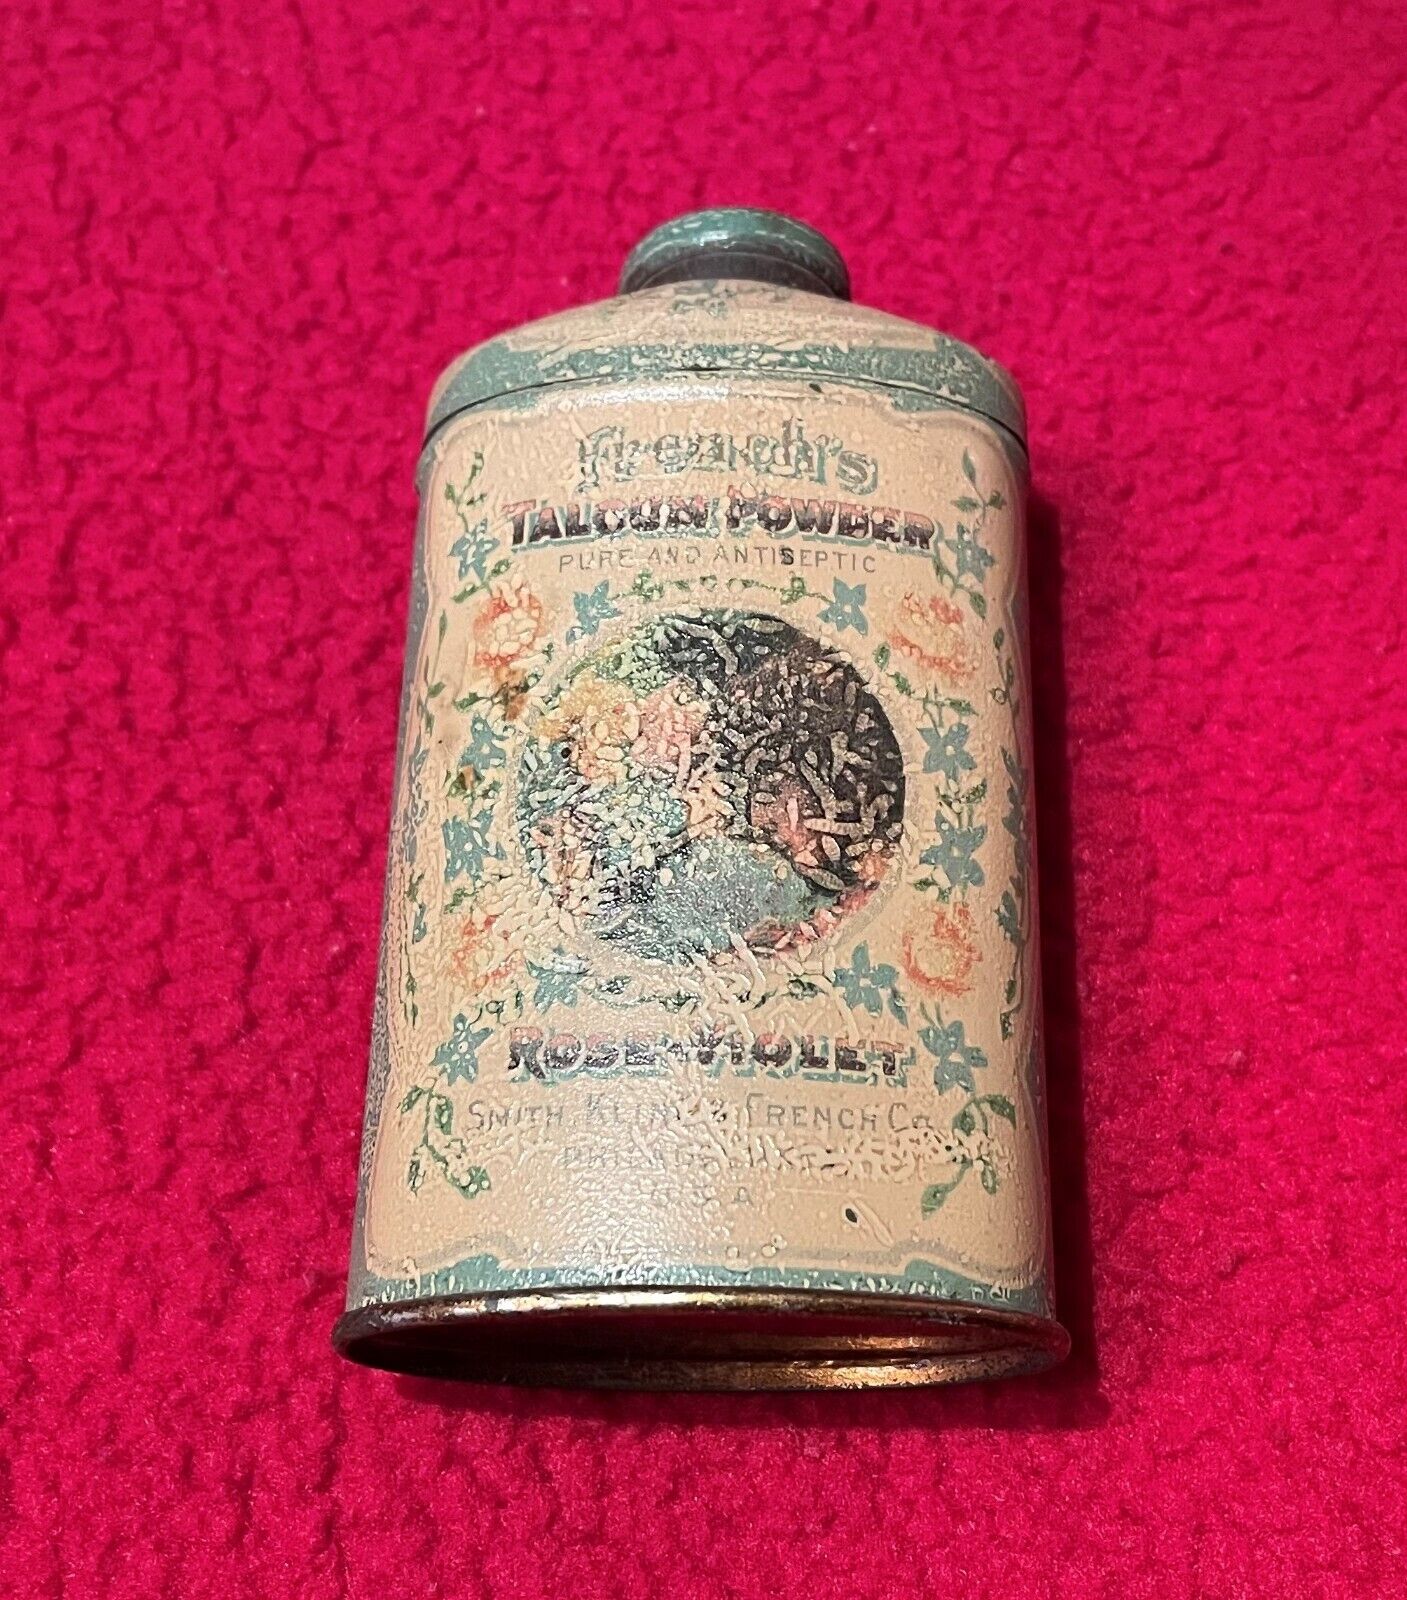 French’s Rose Violet Talcum Powder Tin.  Antique.  (smith Kline French Co.)